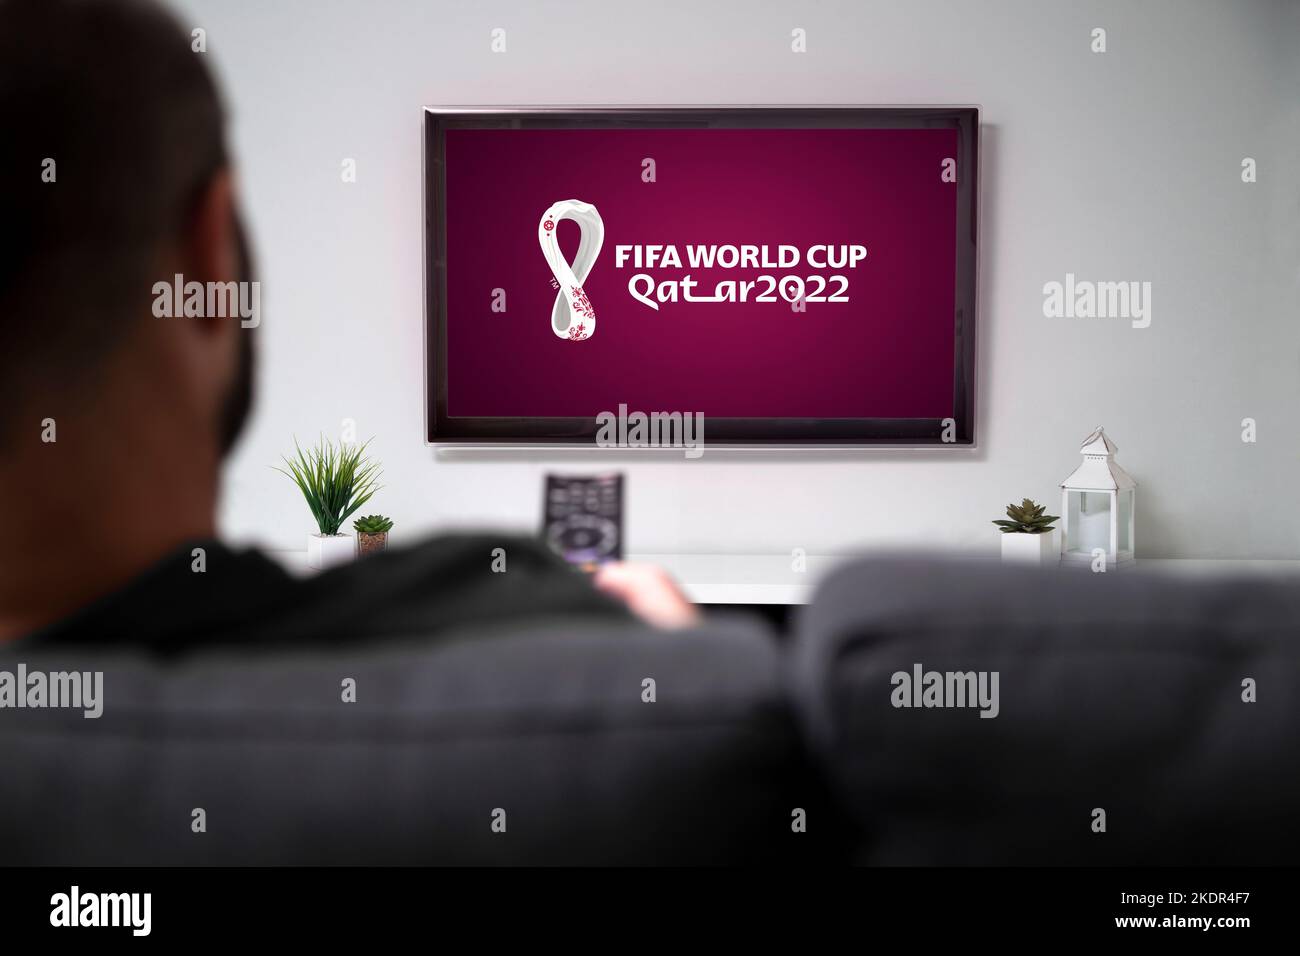 Man looking a smart TV with the QATAR 2022 FIFA World Cup logo in the screen. Doha, Qatar - November 08, 2022. Stock Photo